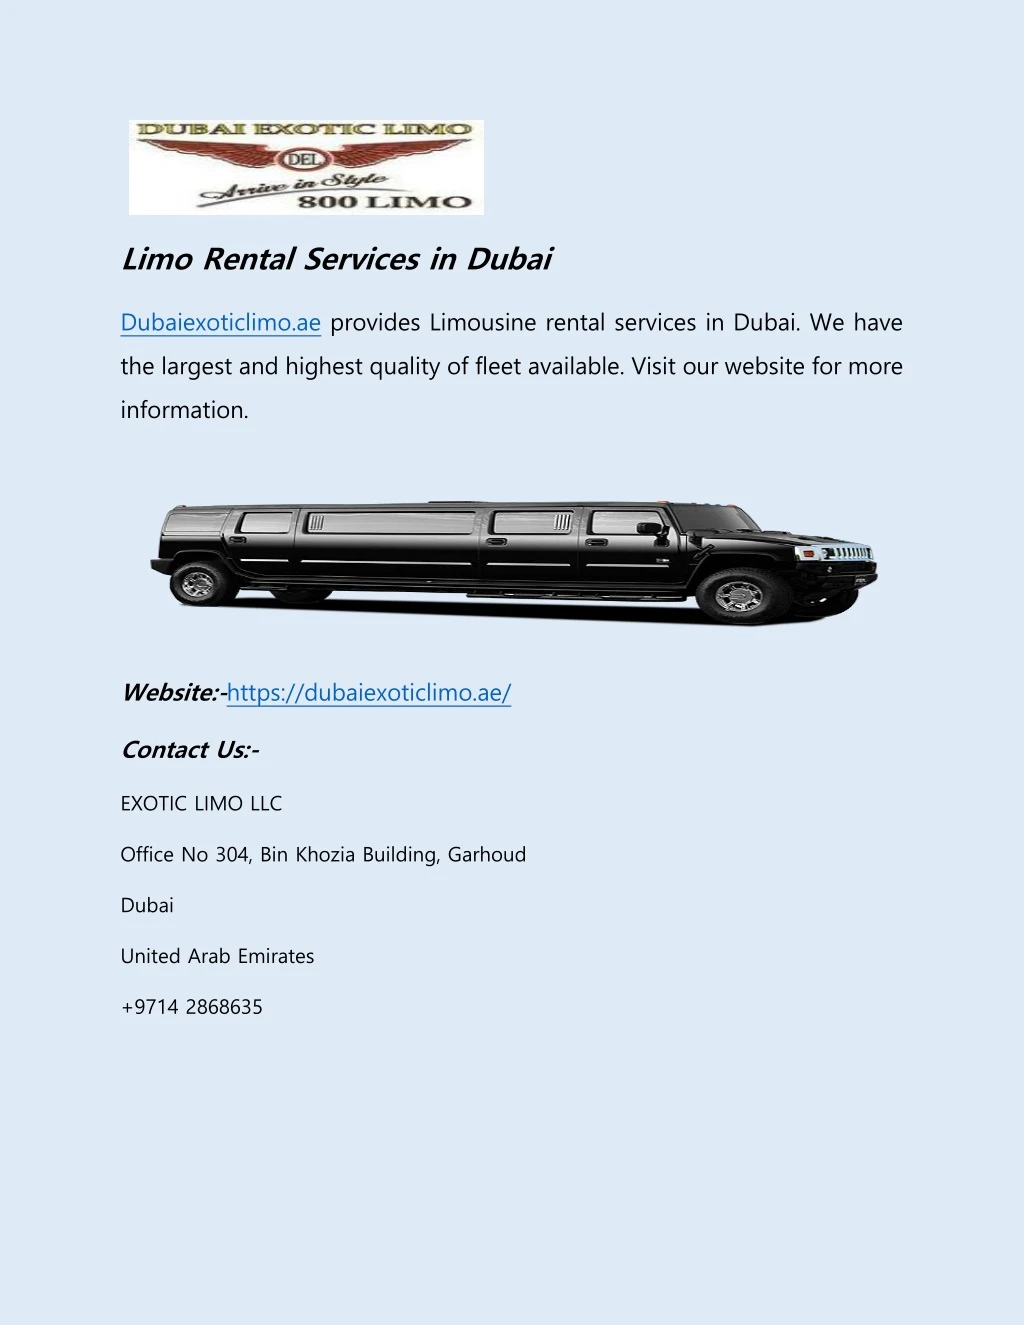 limo rental services in dubai